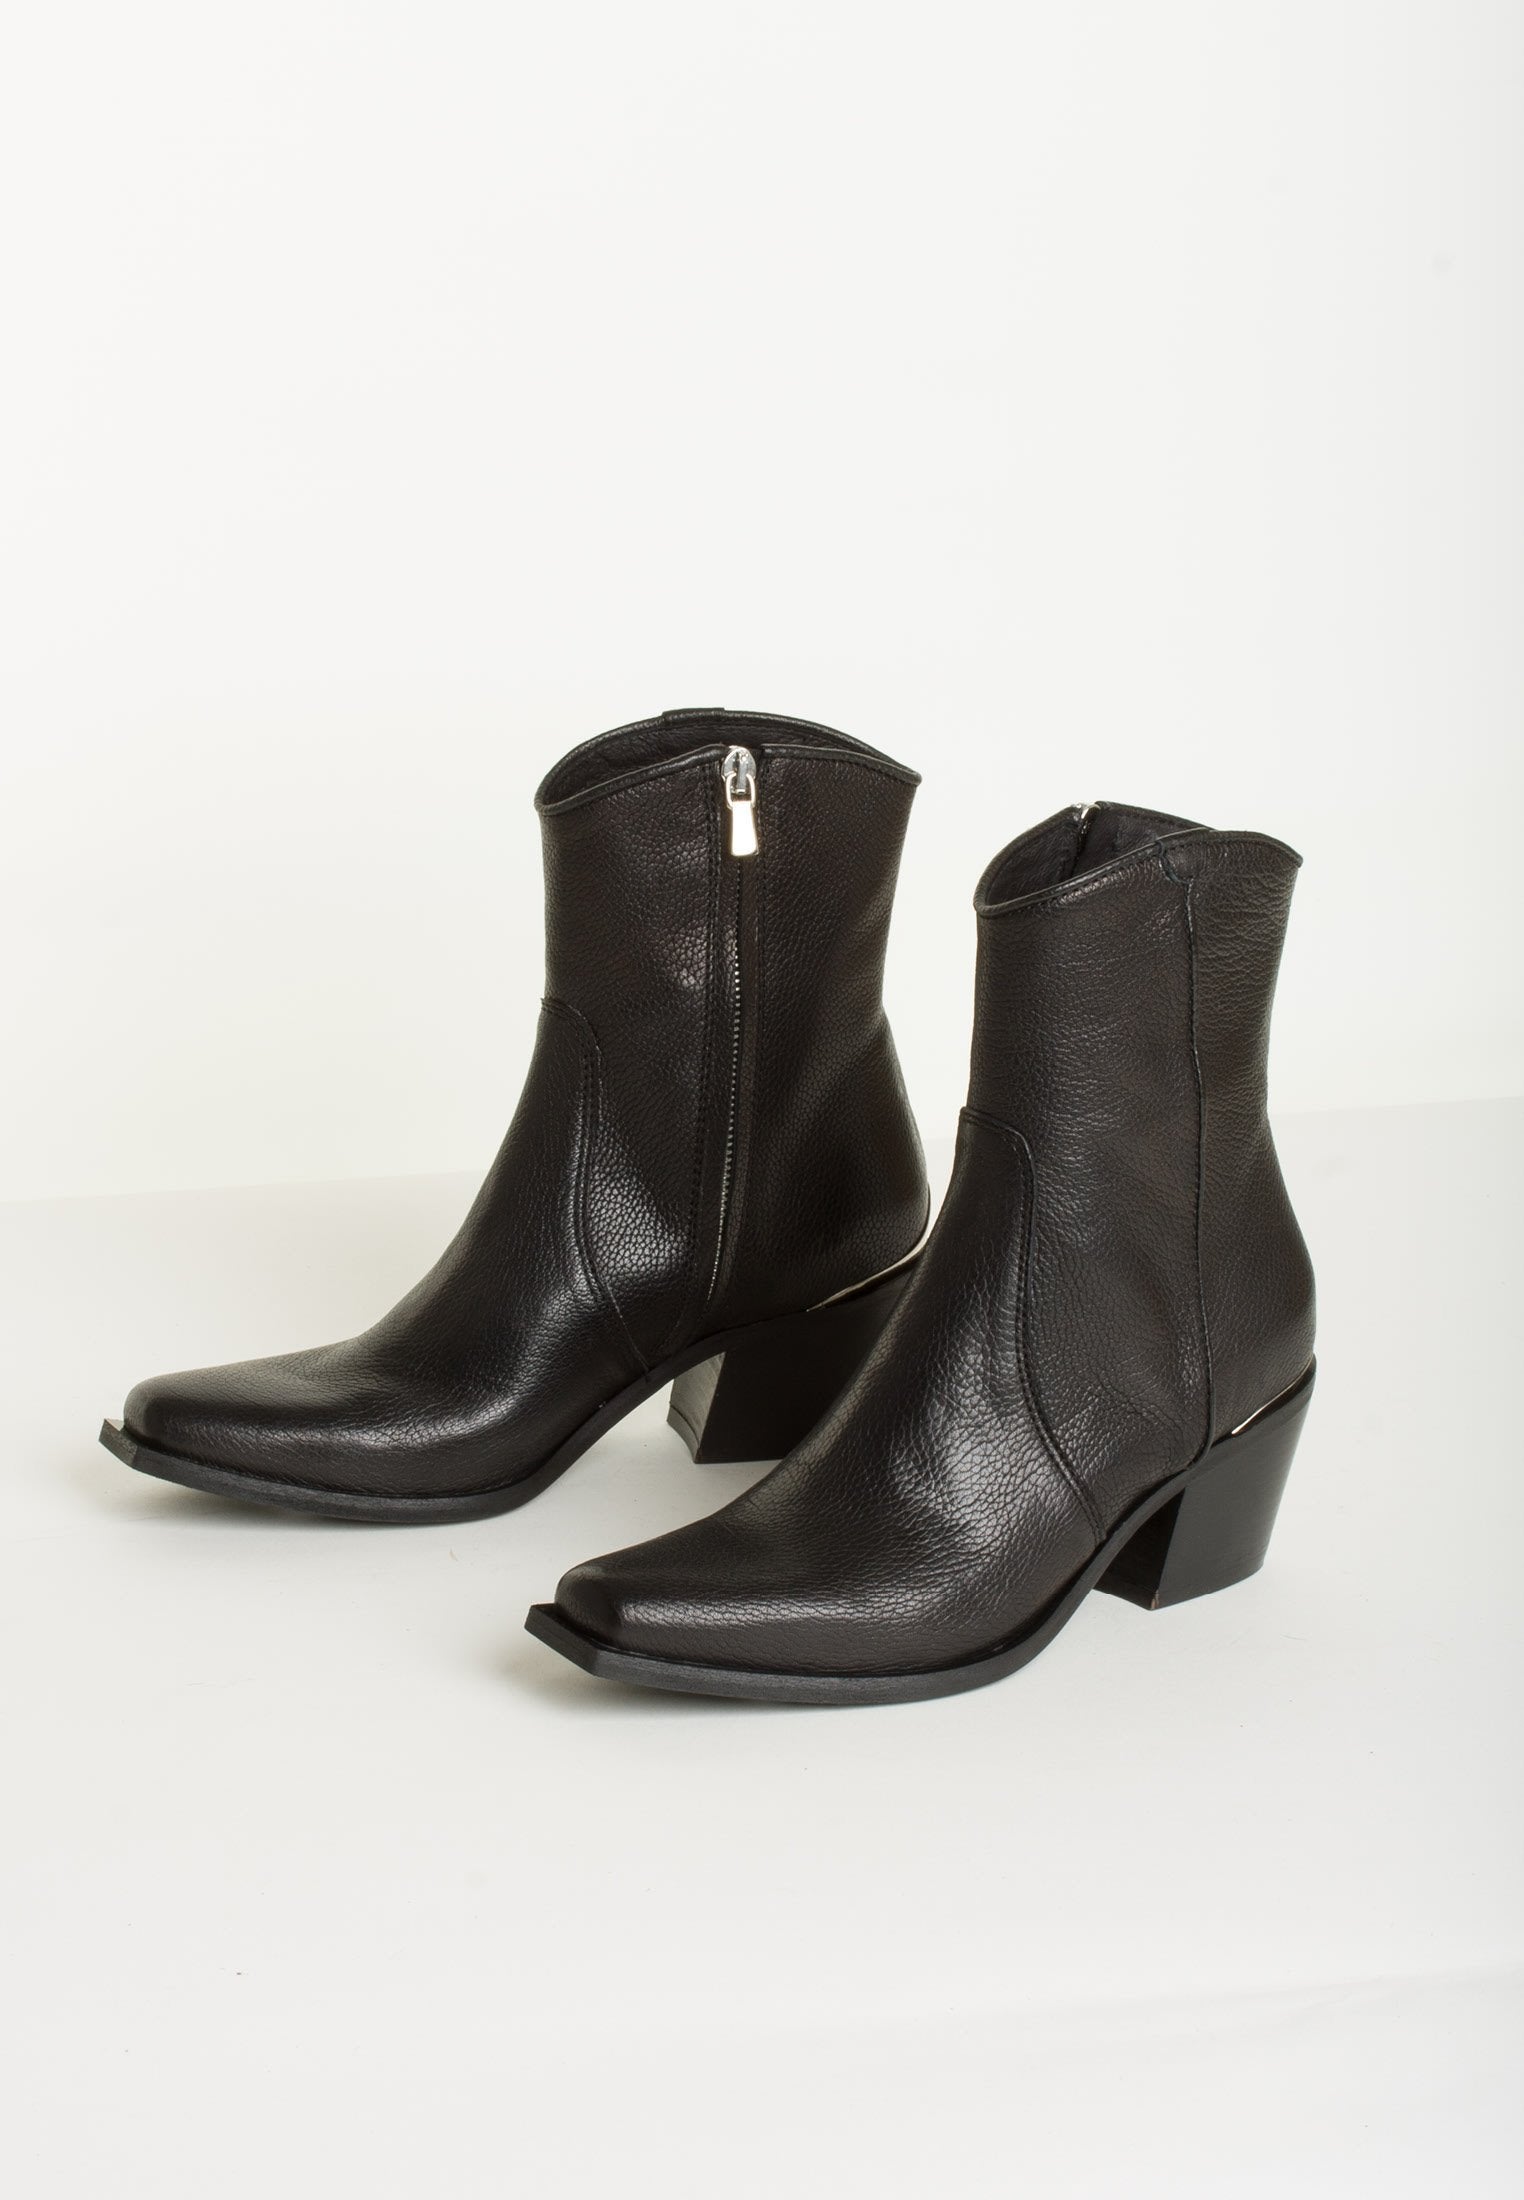 Tessa Buffalo Black Boots TESSA-BLACK-1 - 6